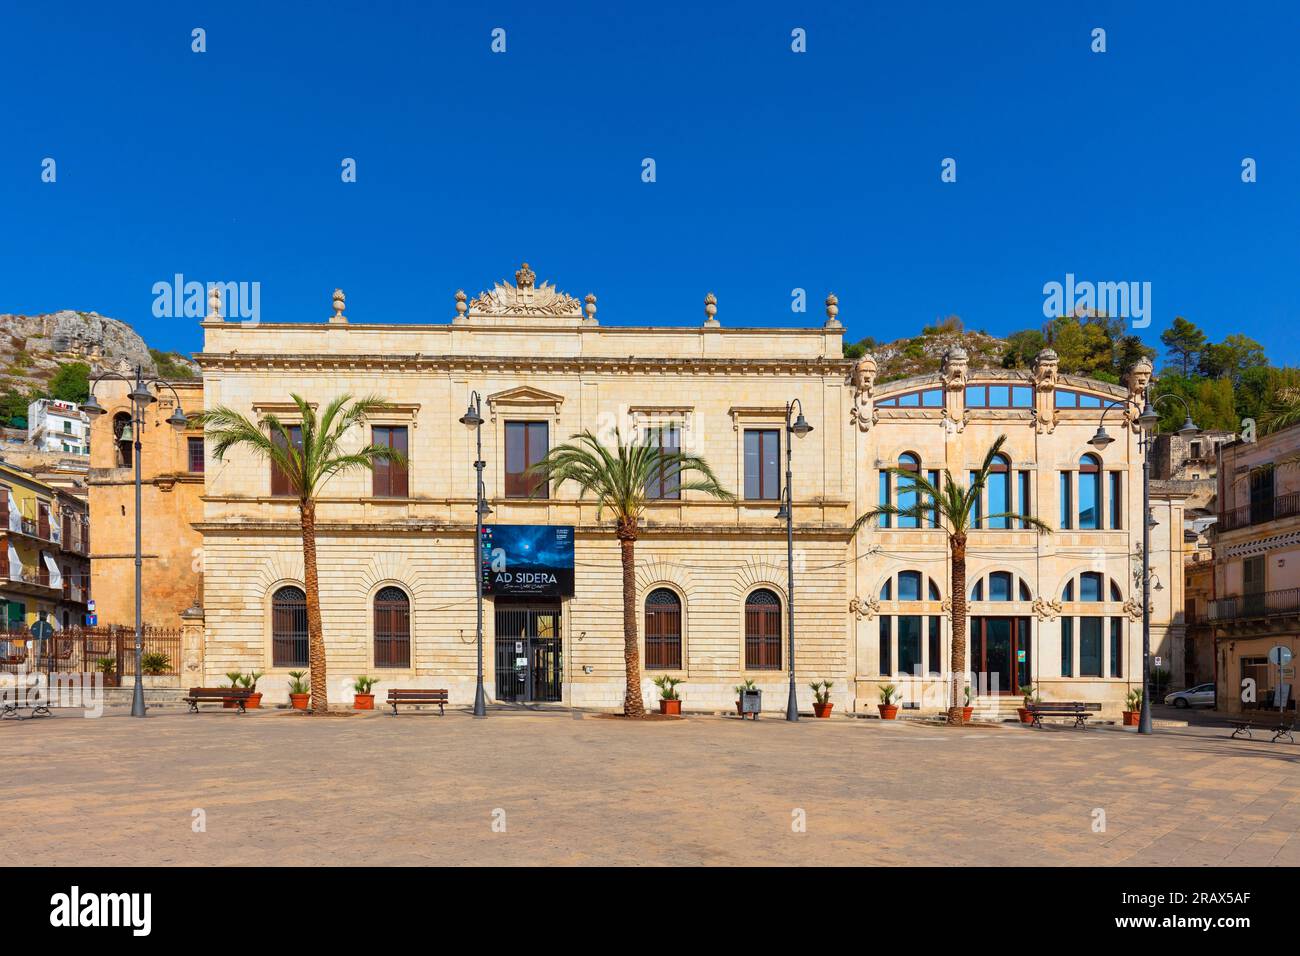 Pietro Floridia Auditorium, Modica, Ragusa, Sicily, Italy Stock Photo